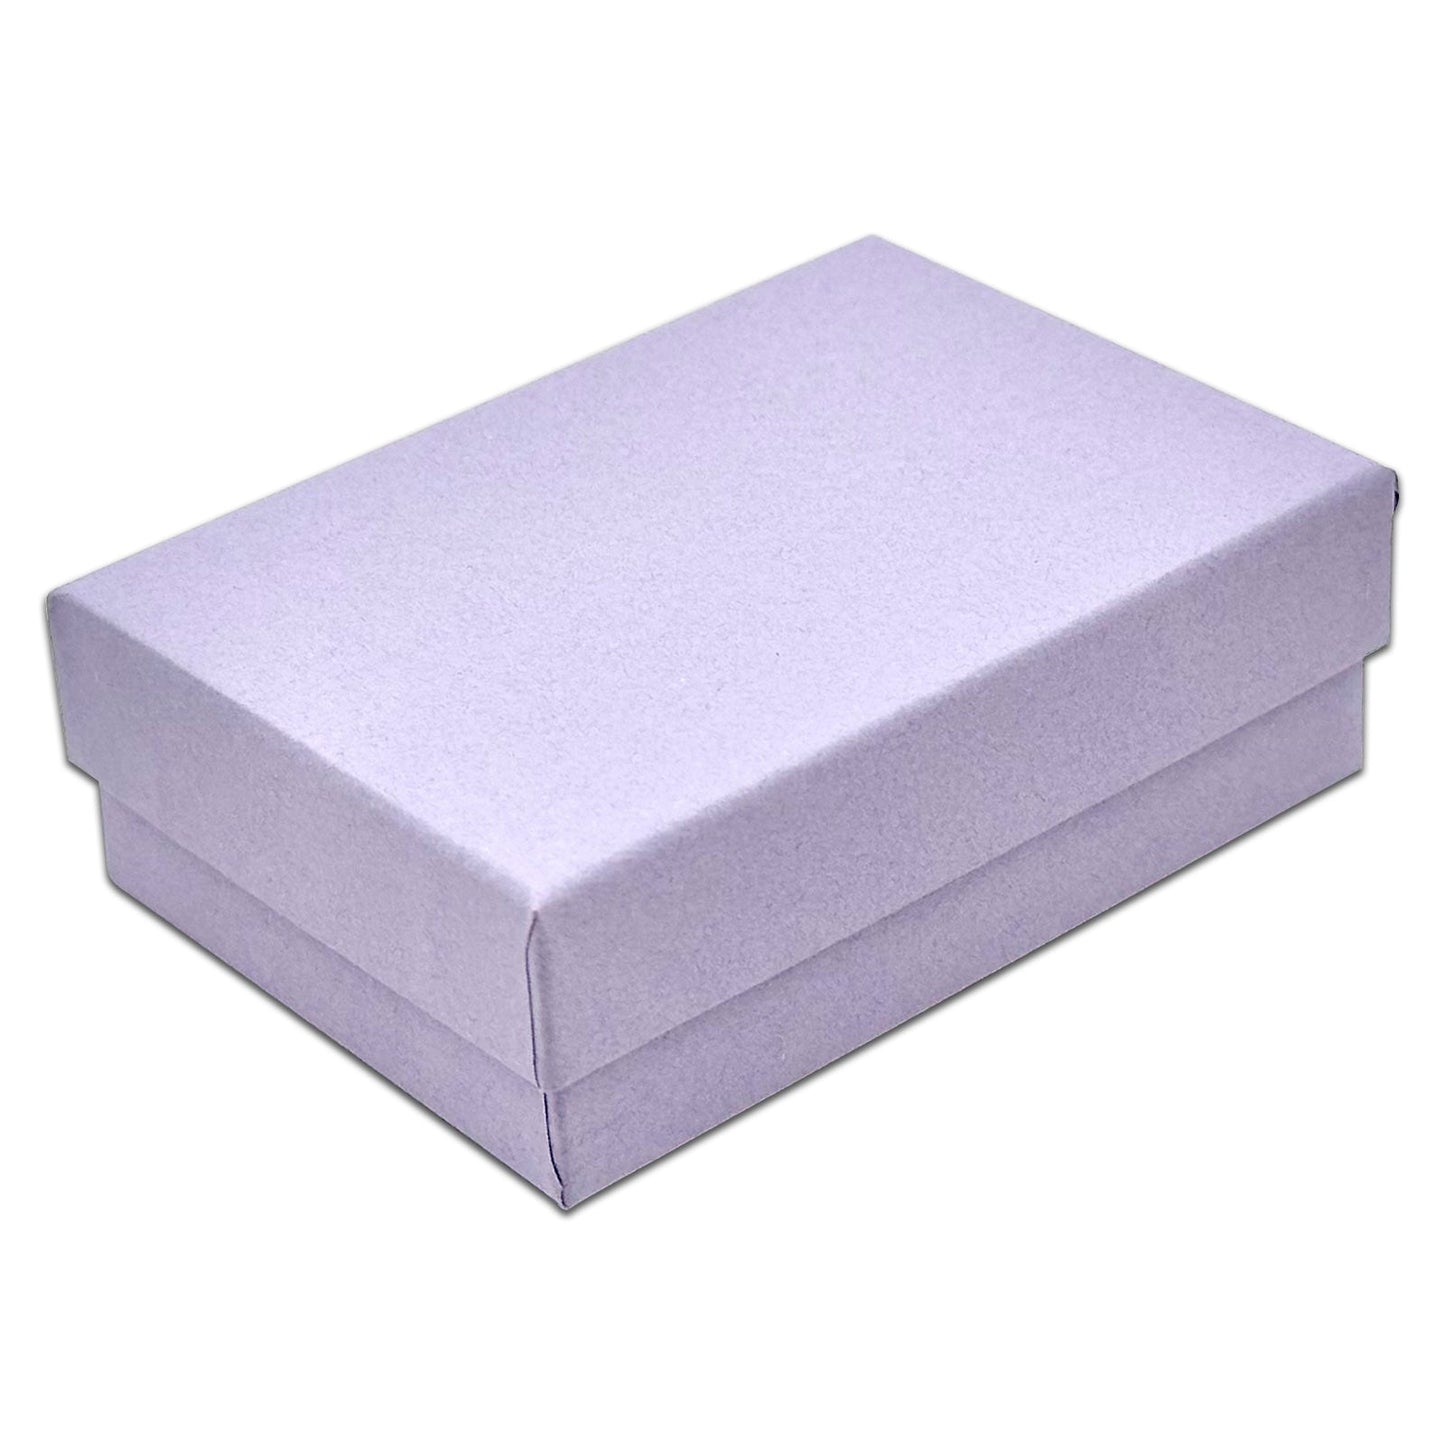 3 1/4" x 2 1/4" x 1" Light Lavender Cotton Filled Paper Box (25-Pack)